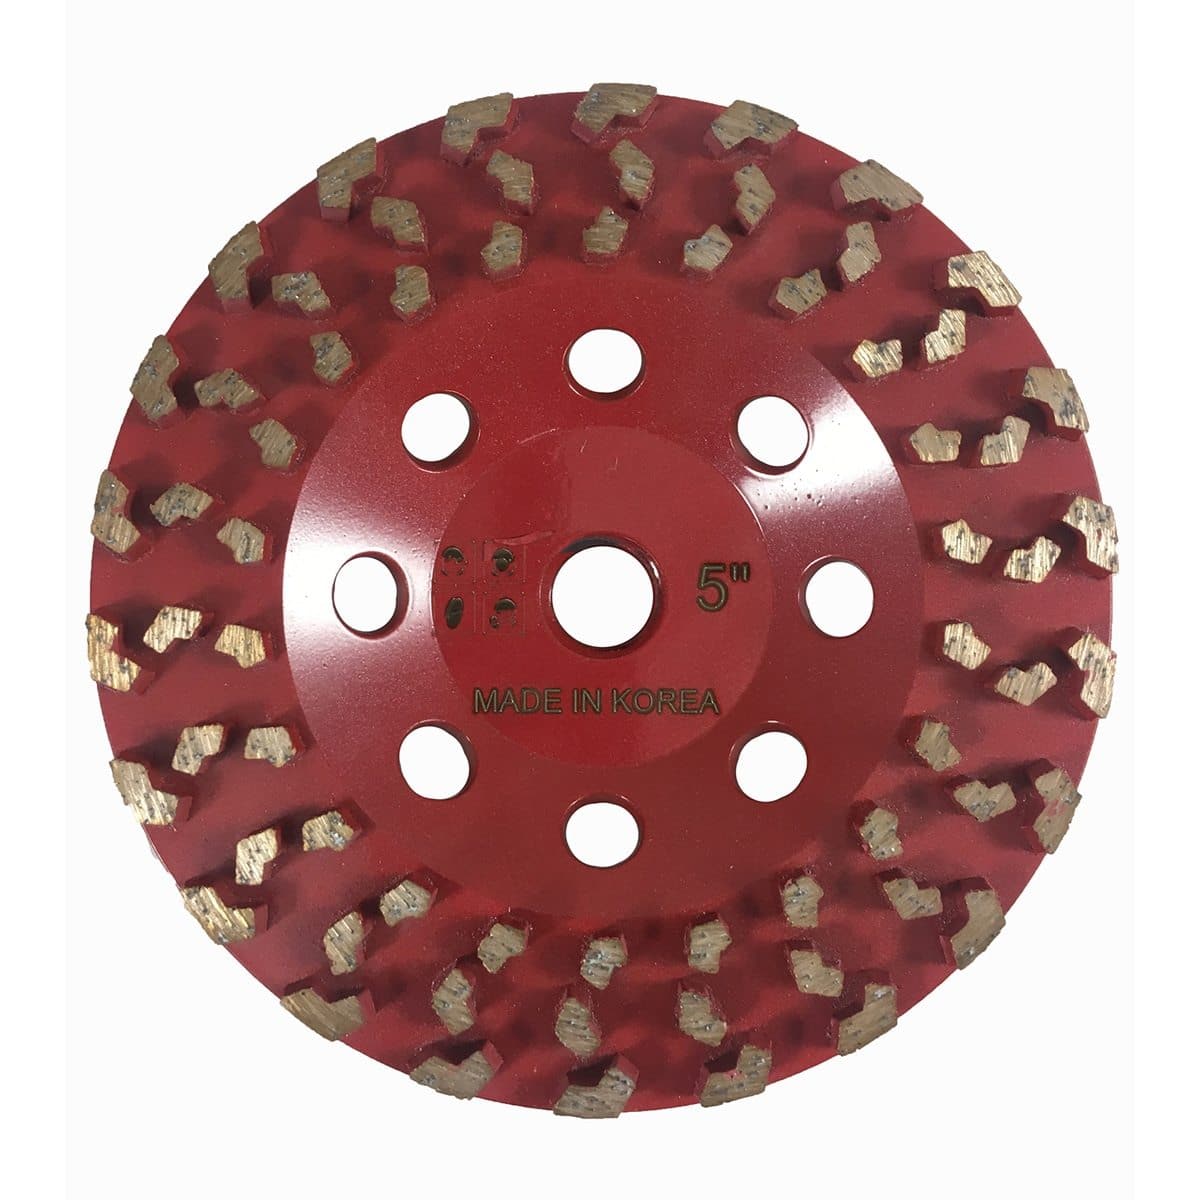 Dia Plus Vacuum Brazed Cup Wheel for Grinding Concrete, Epoxy, and Coatings - Dia Plus